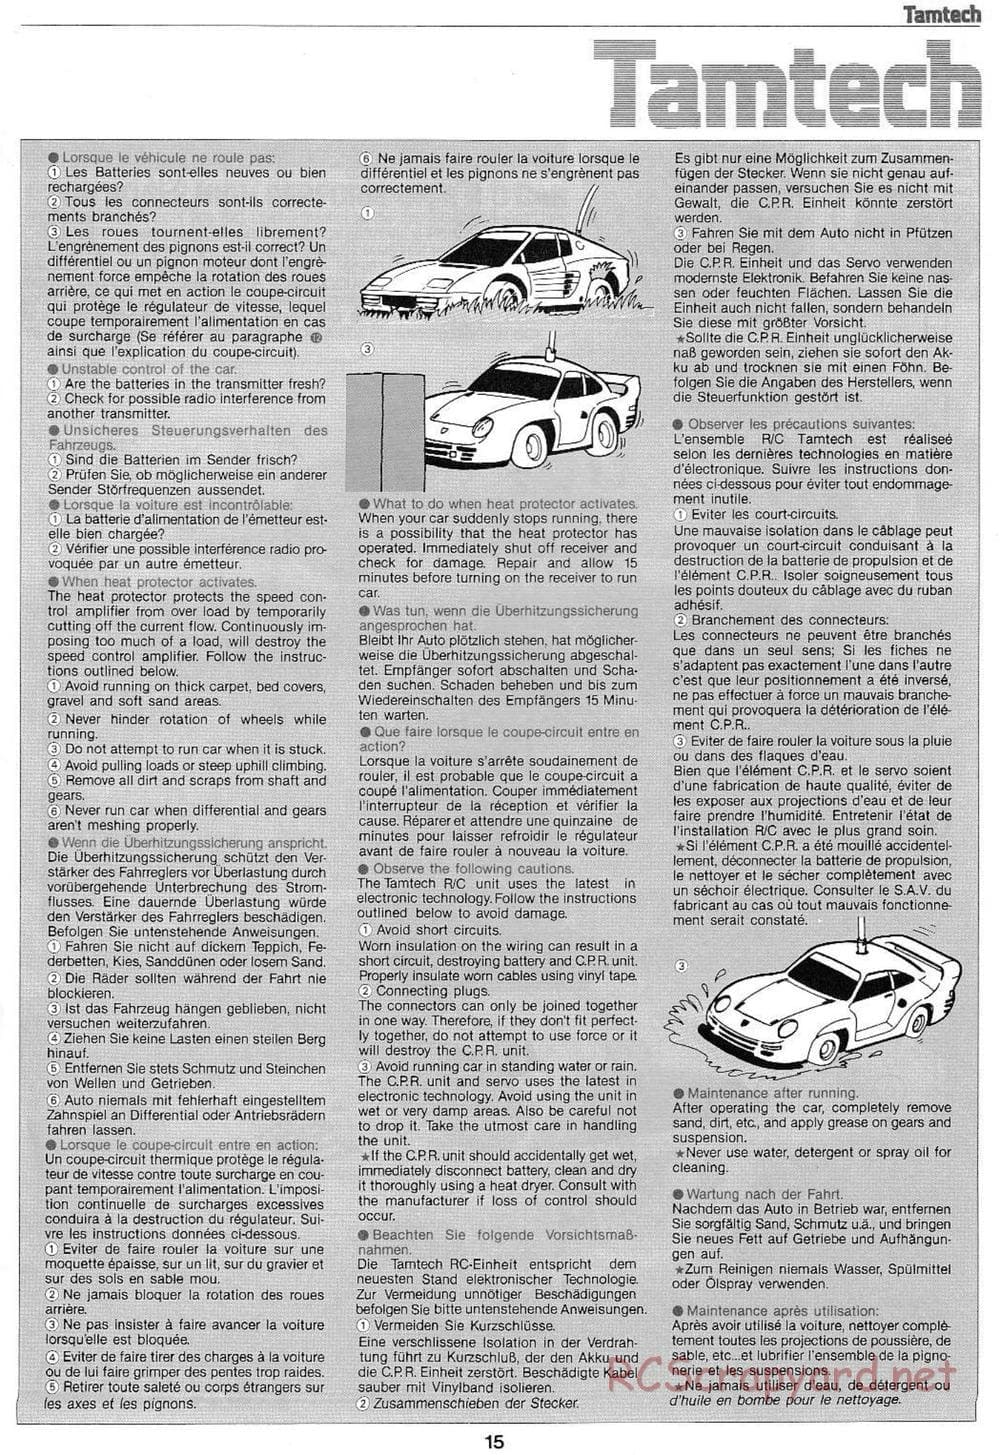 Tamiya - Tamtech - Porsche 961 Chassis - Manual - Page 15